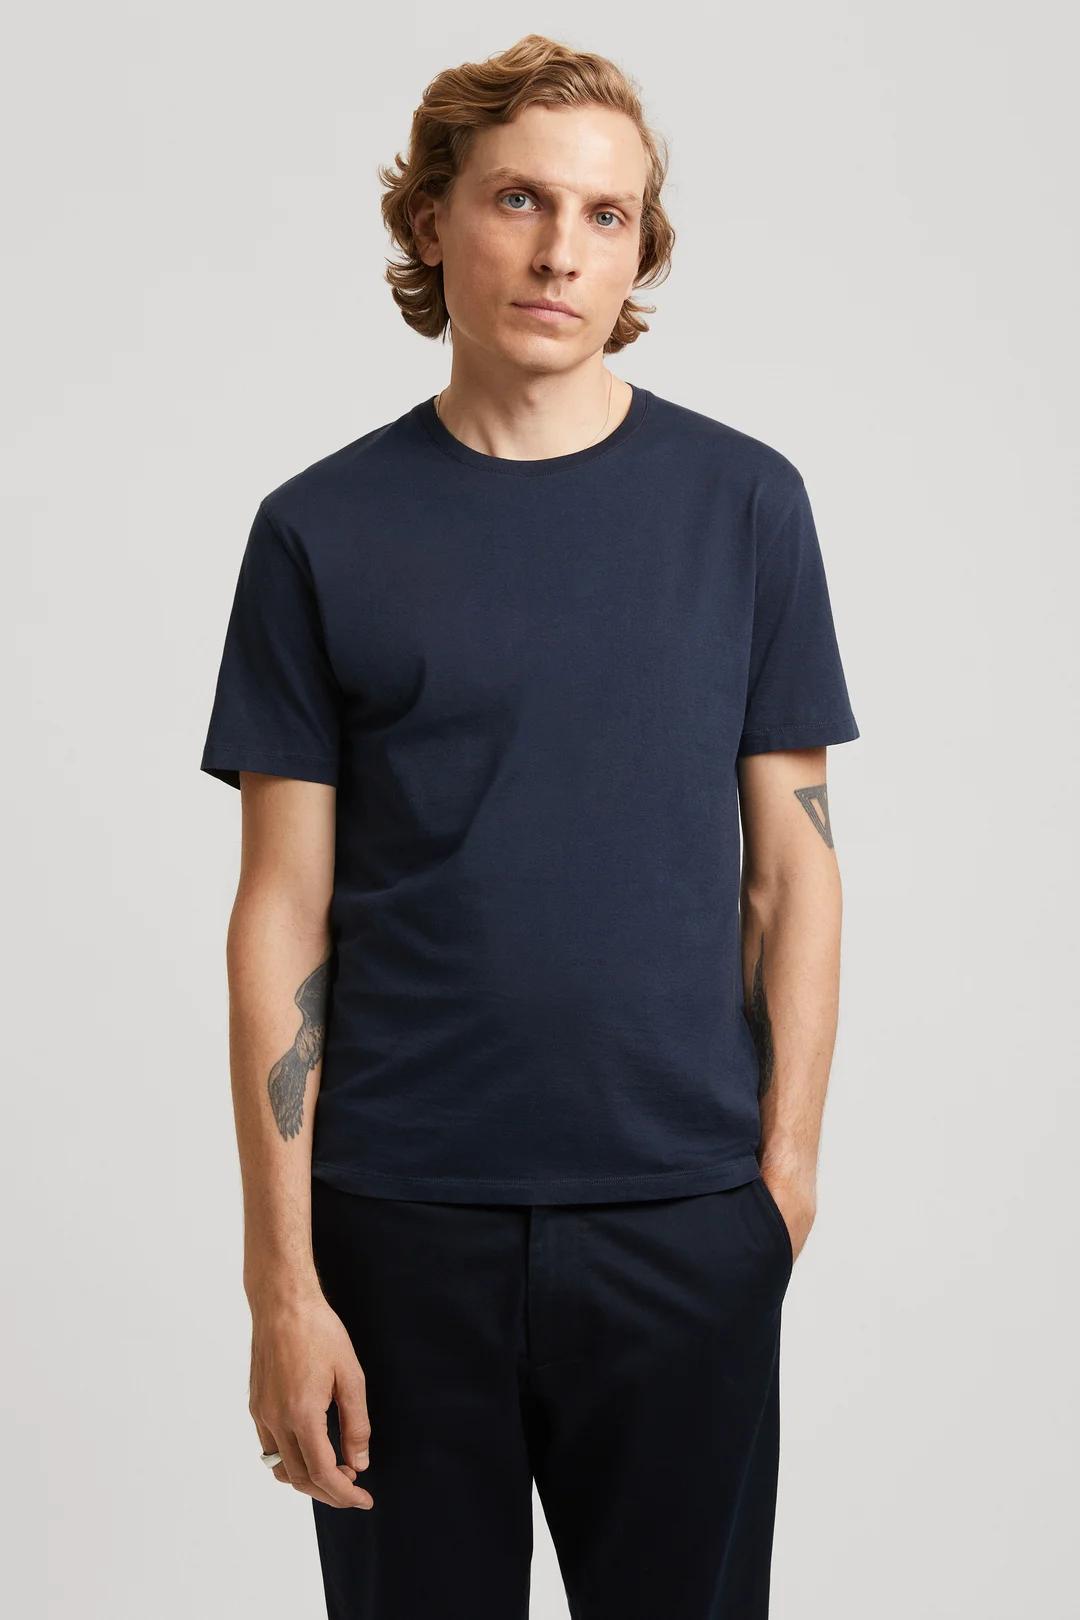 Dark Navy Lightweight T-Shirt | ELS Cotton Crewneck - ASKET